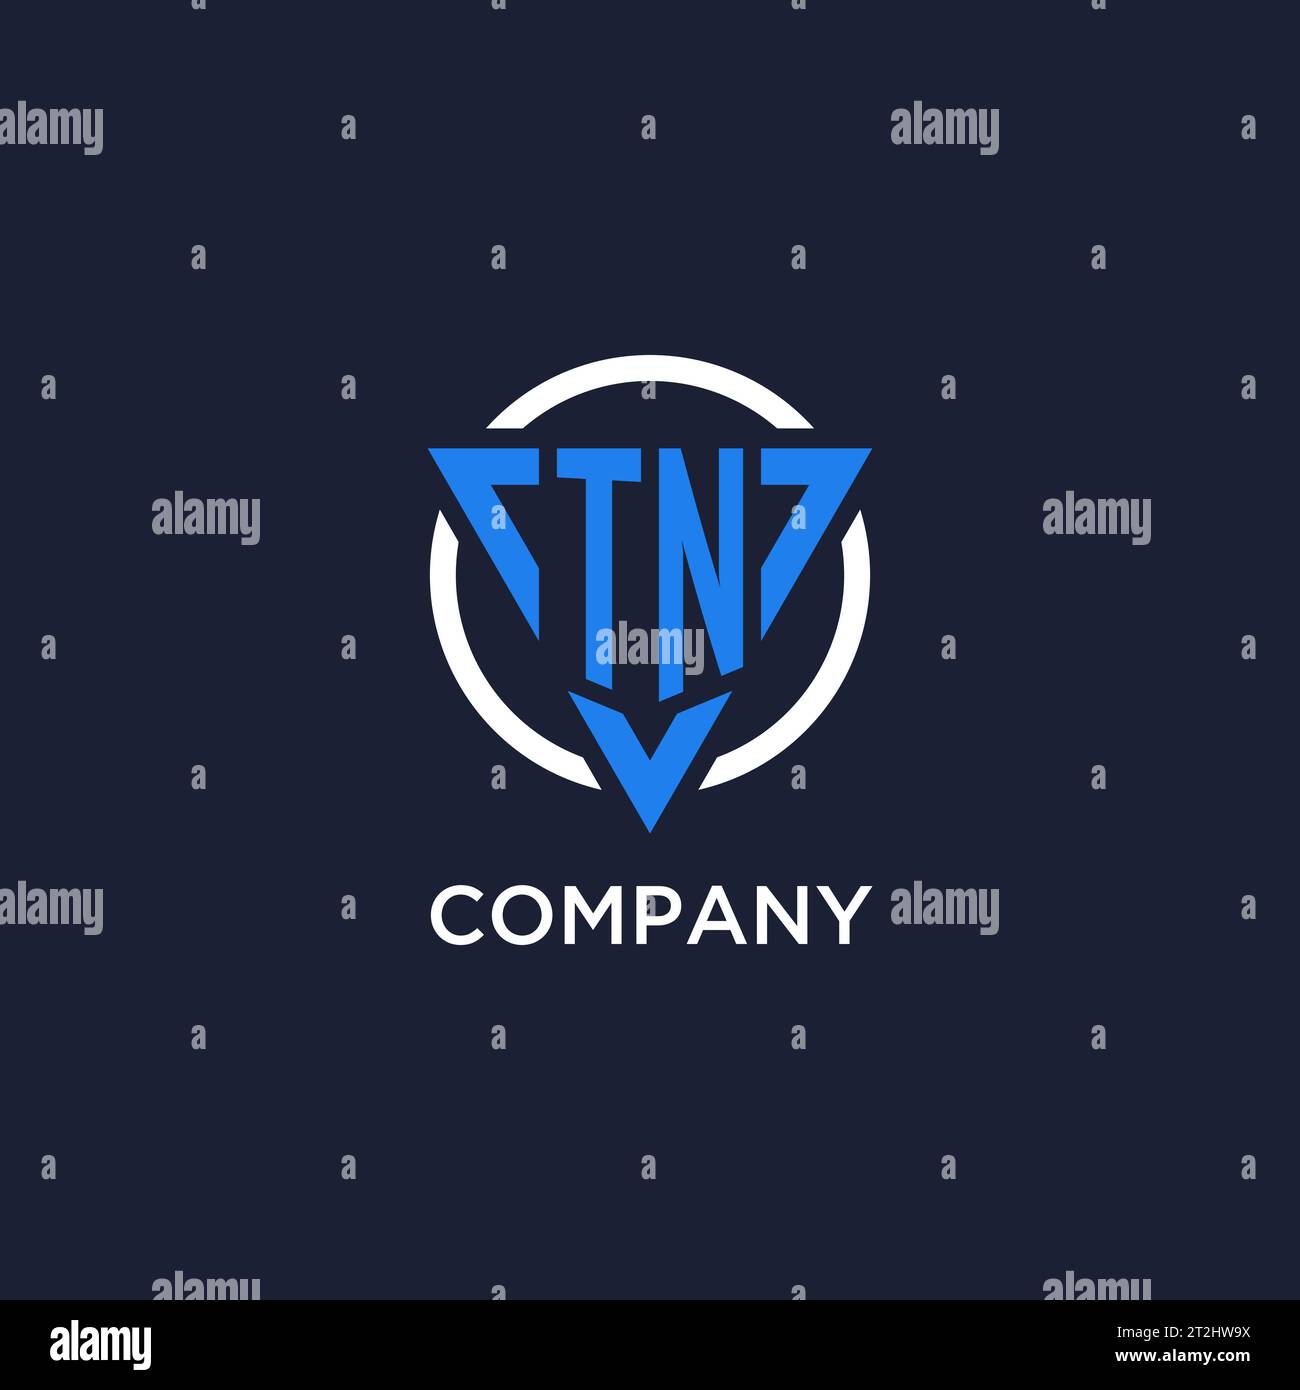 Tn logo design Stock Vector Images - Alamy